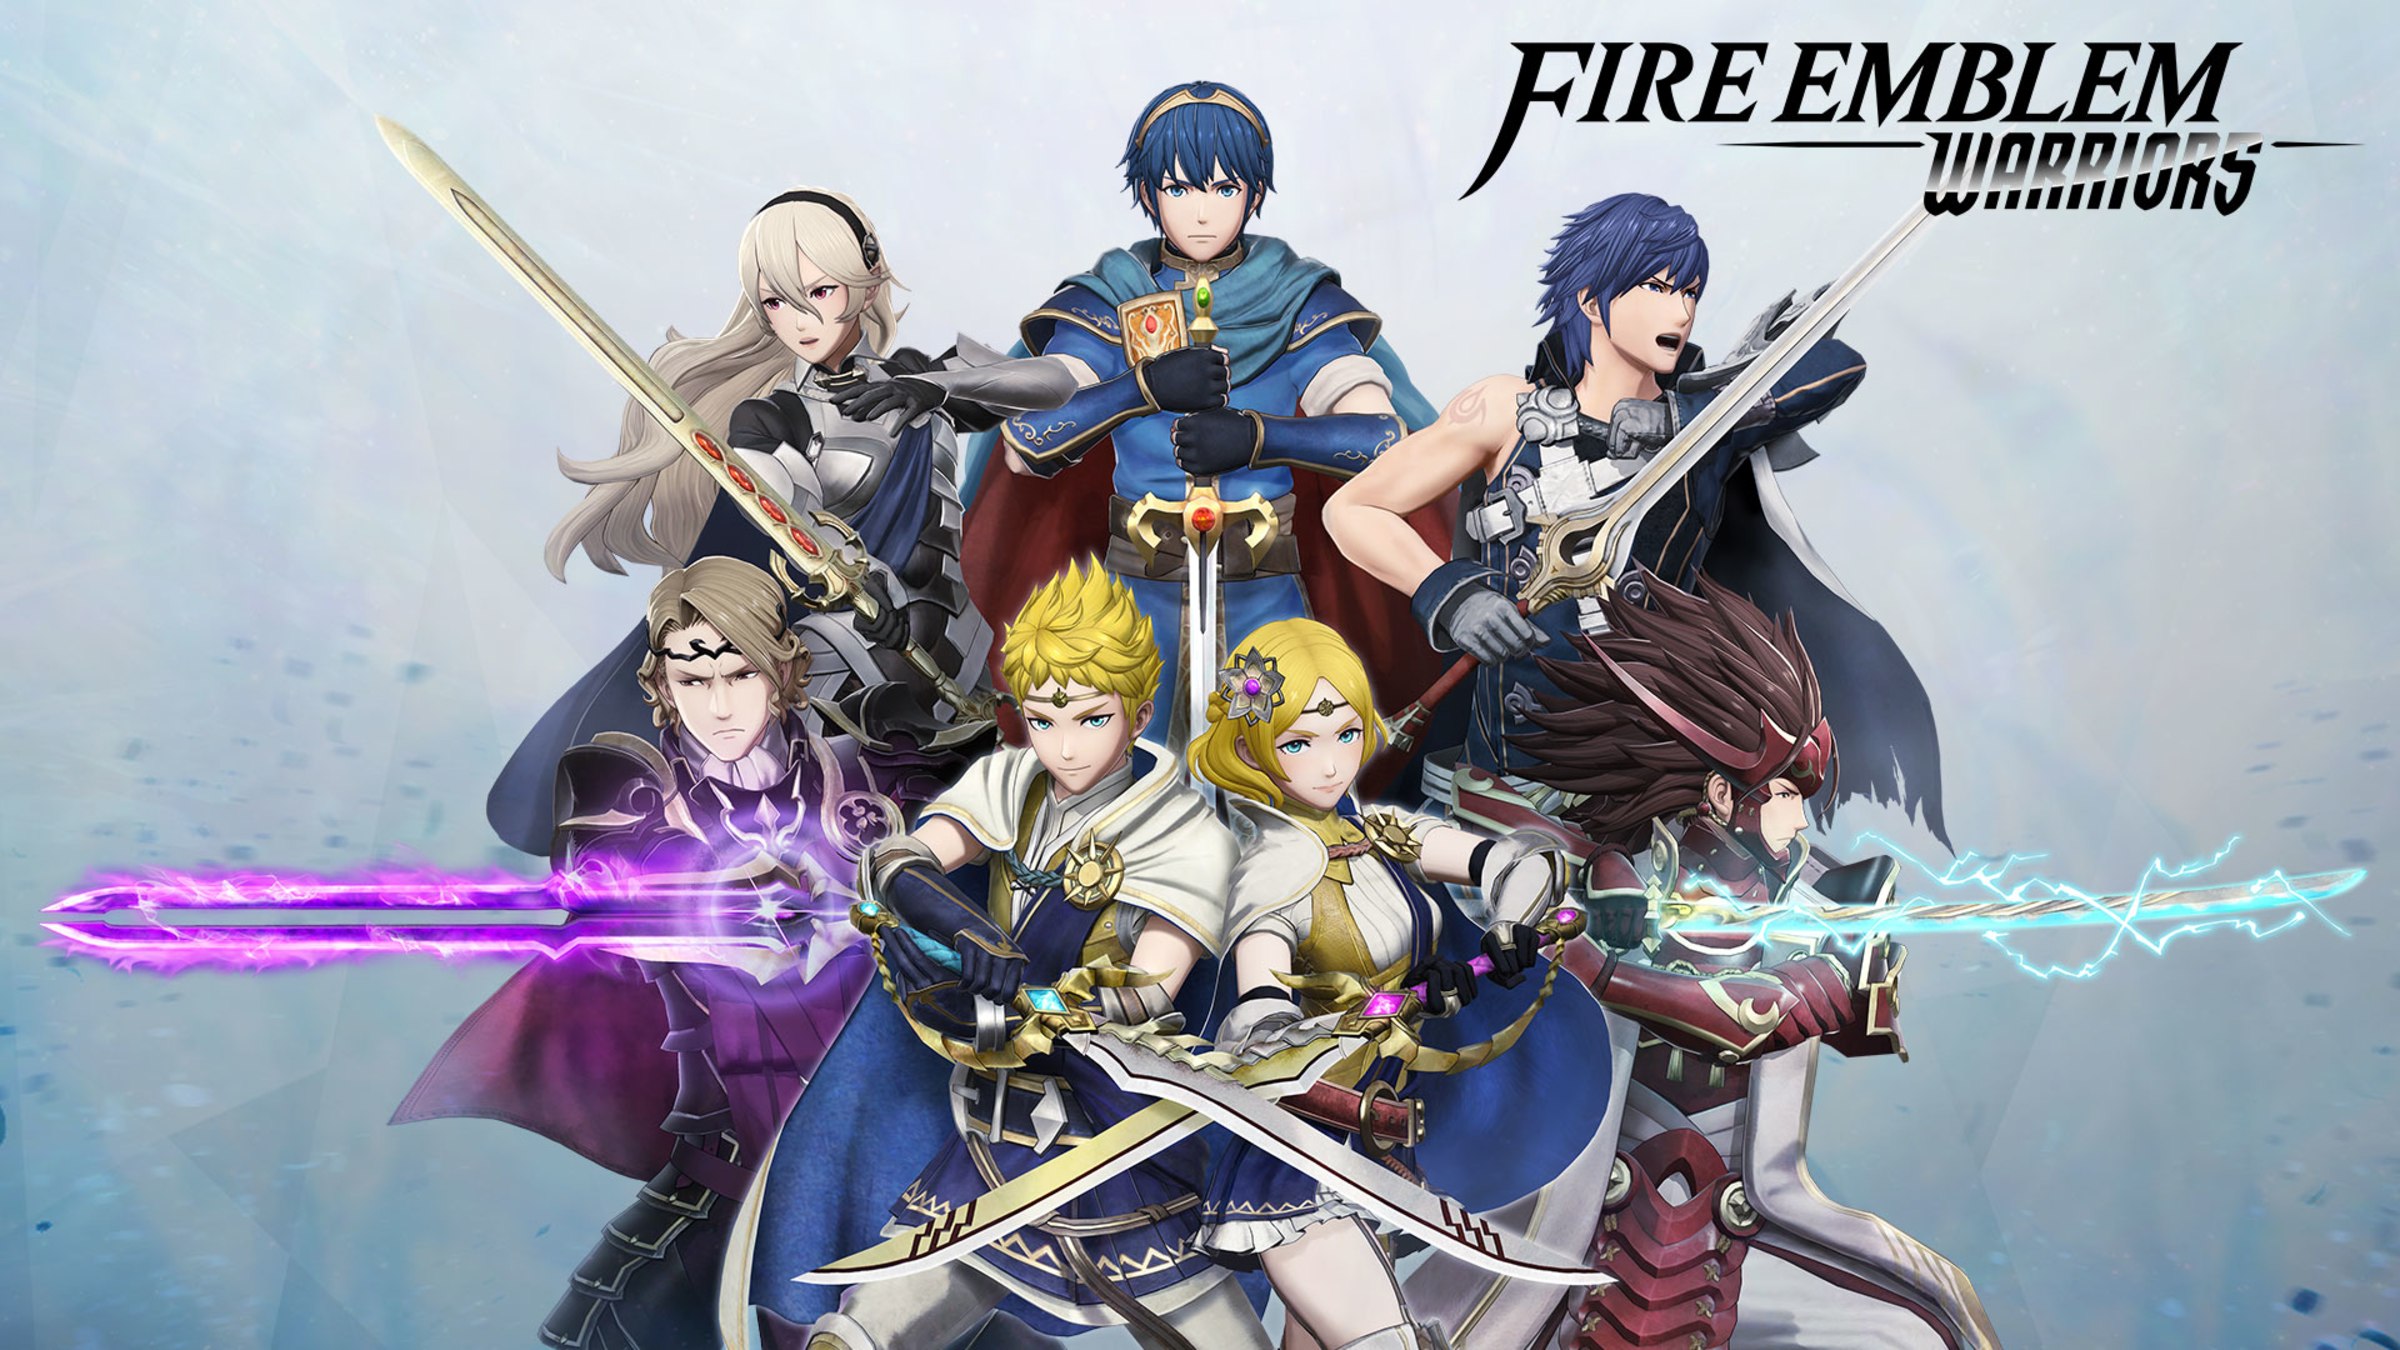 Warriors Nintendo Fire Switch for Official Nintendo Site - Emblem